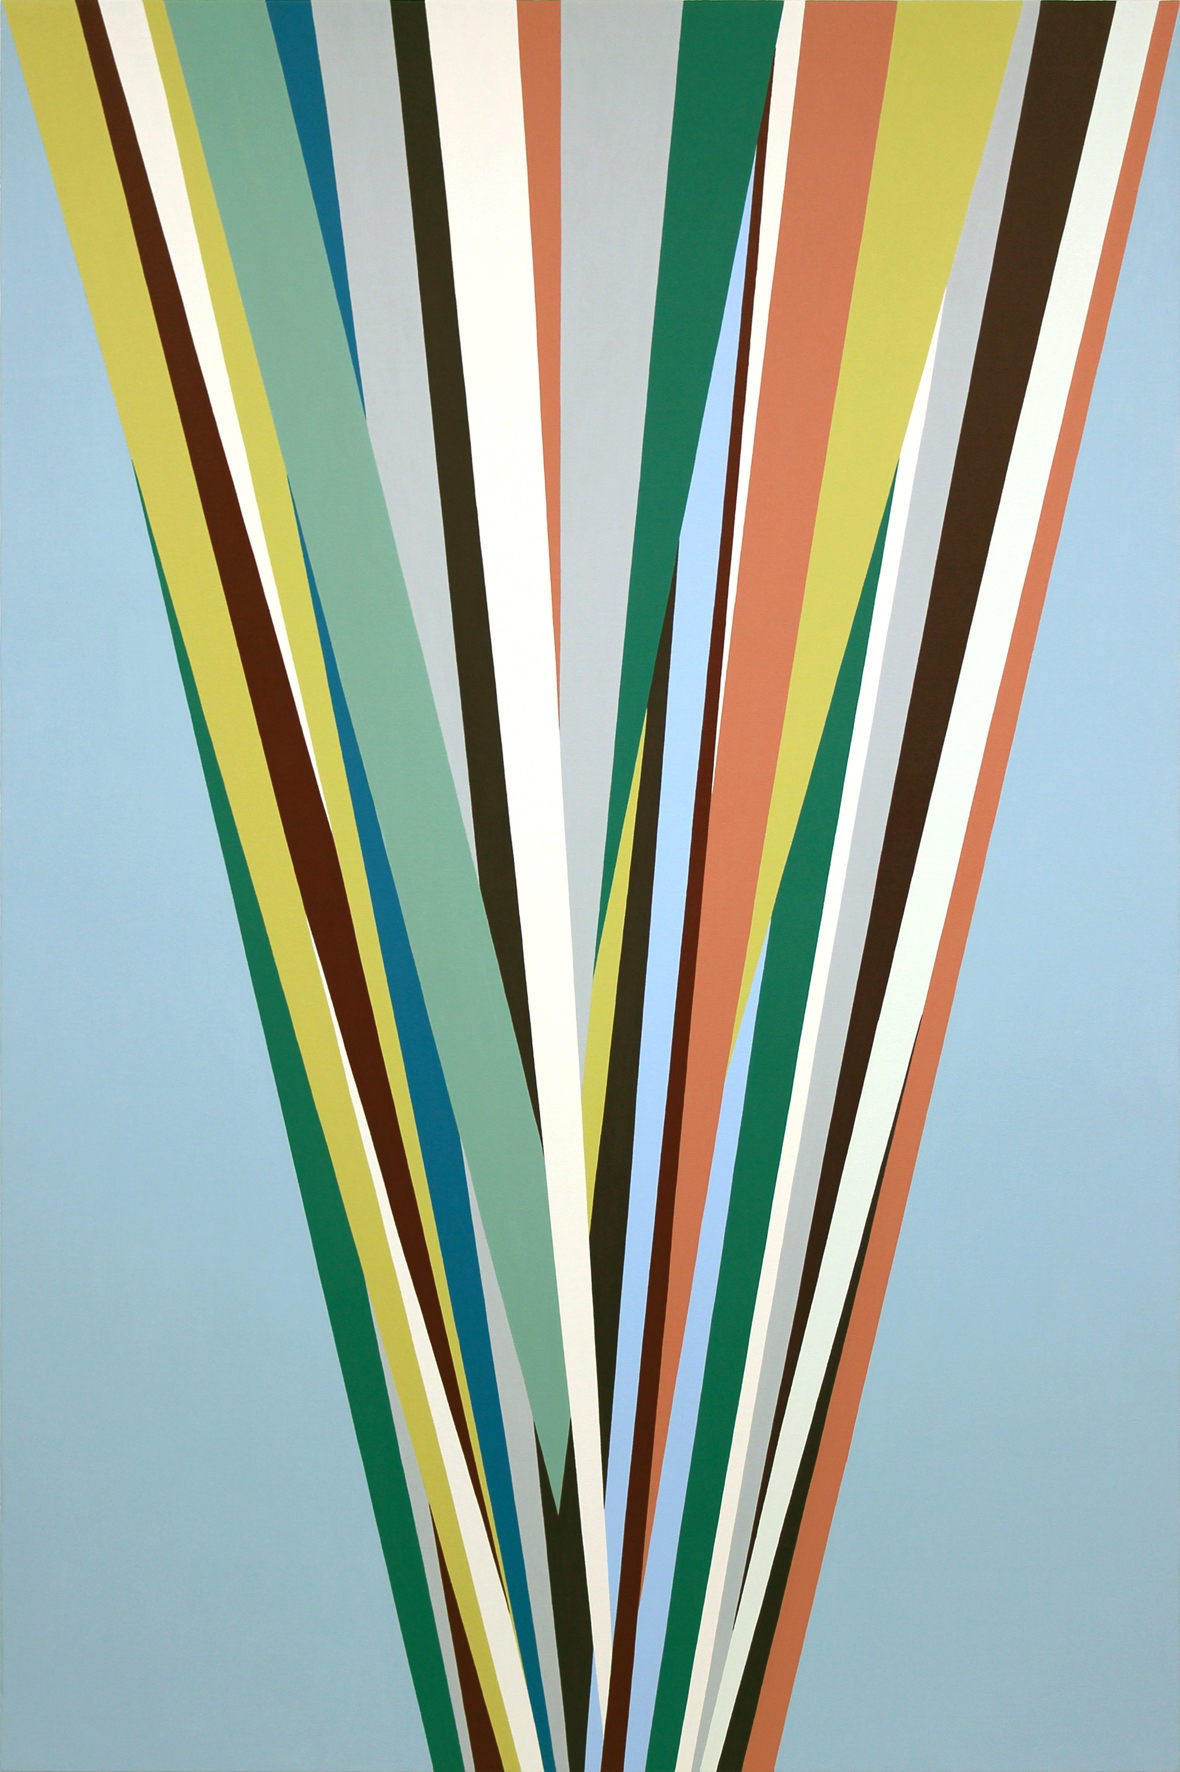 Memorias Imaginadas, 2012, acrylic on canvas, 195 x 130 cm.